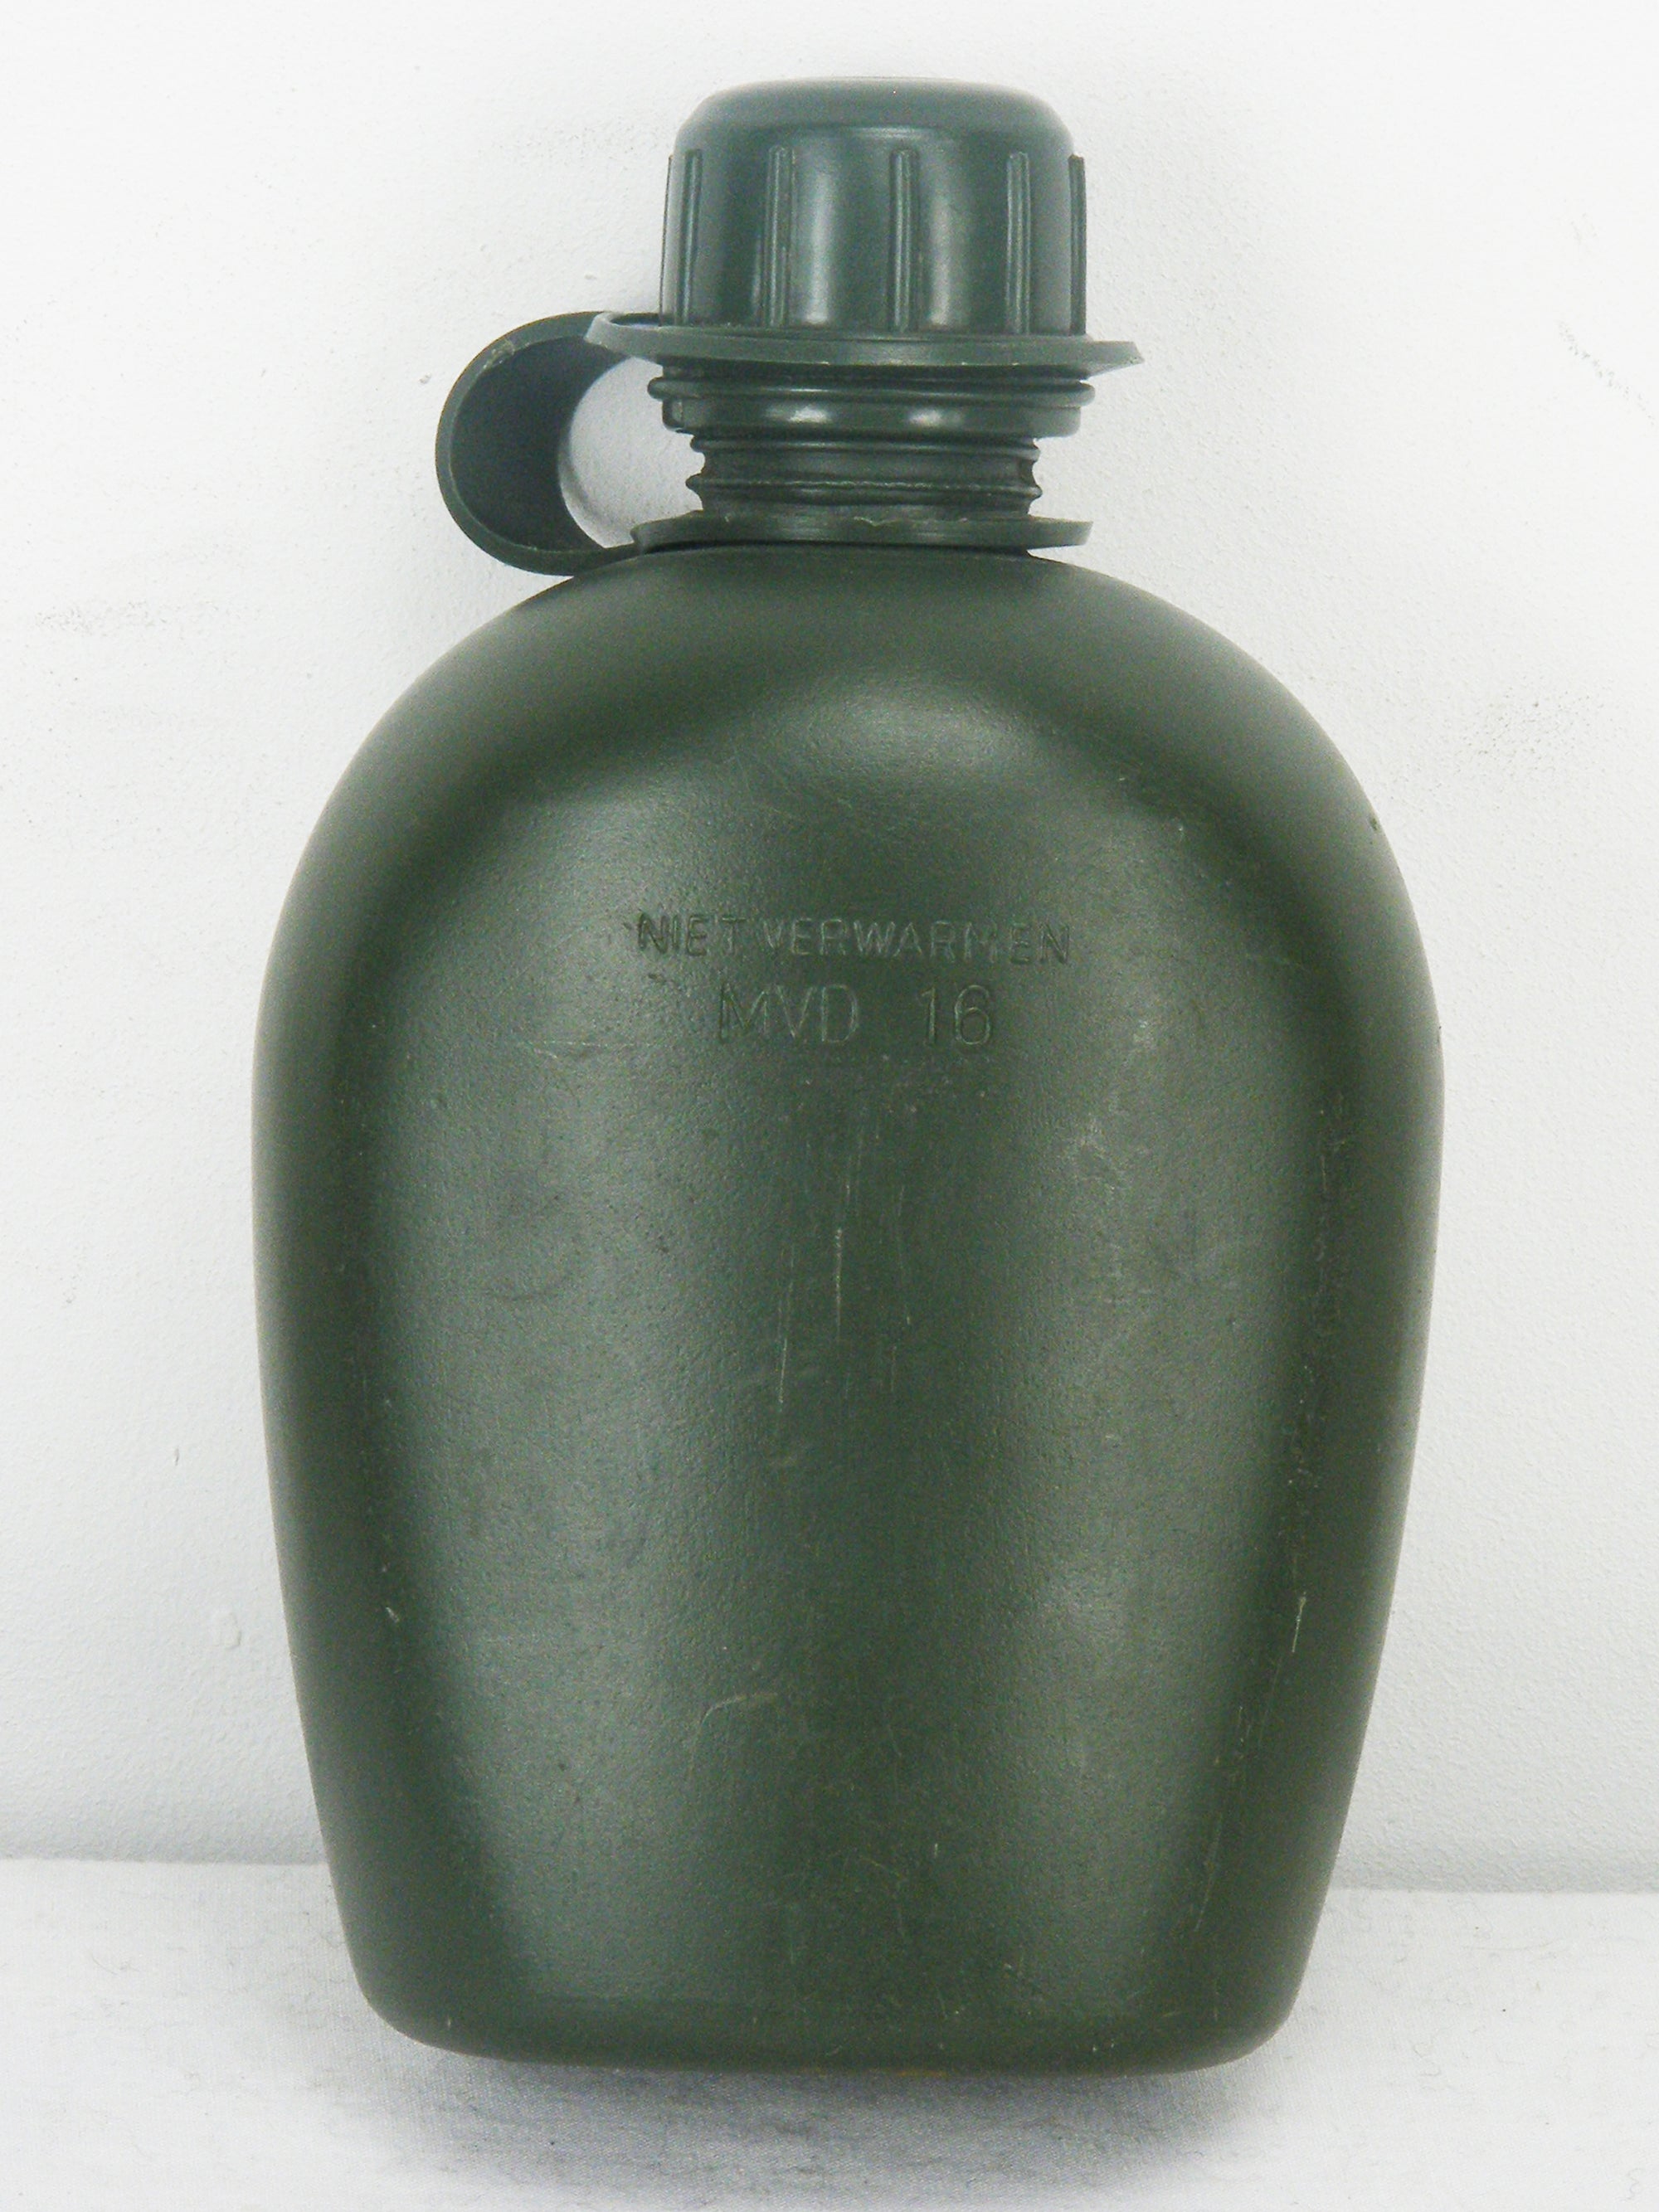 Dutch NATO Issue Green Canteen Water Bottle - 1 litre